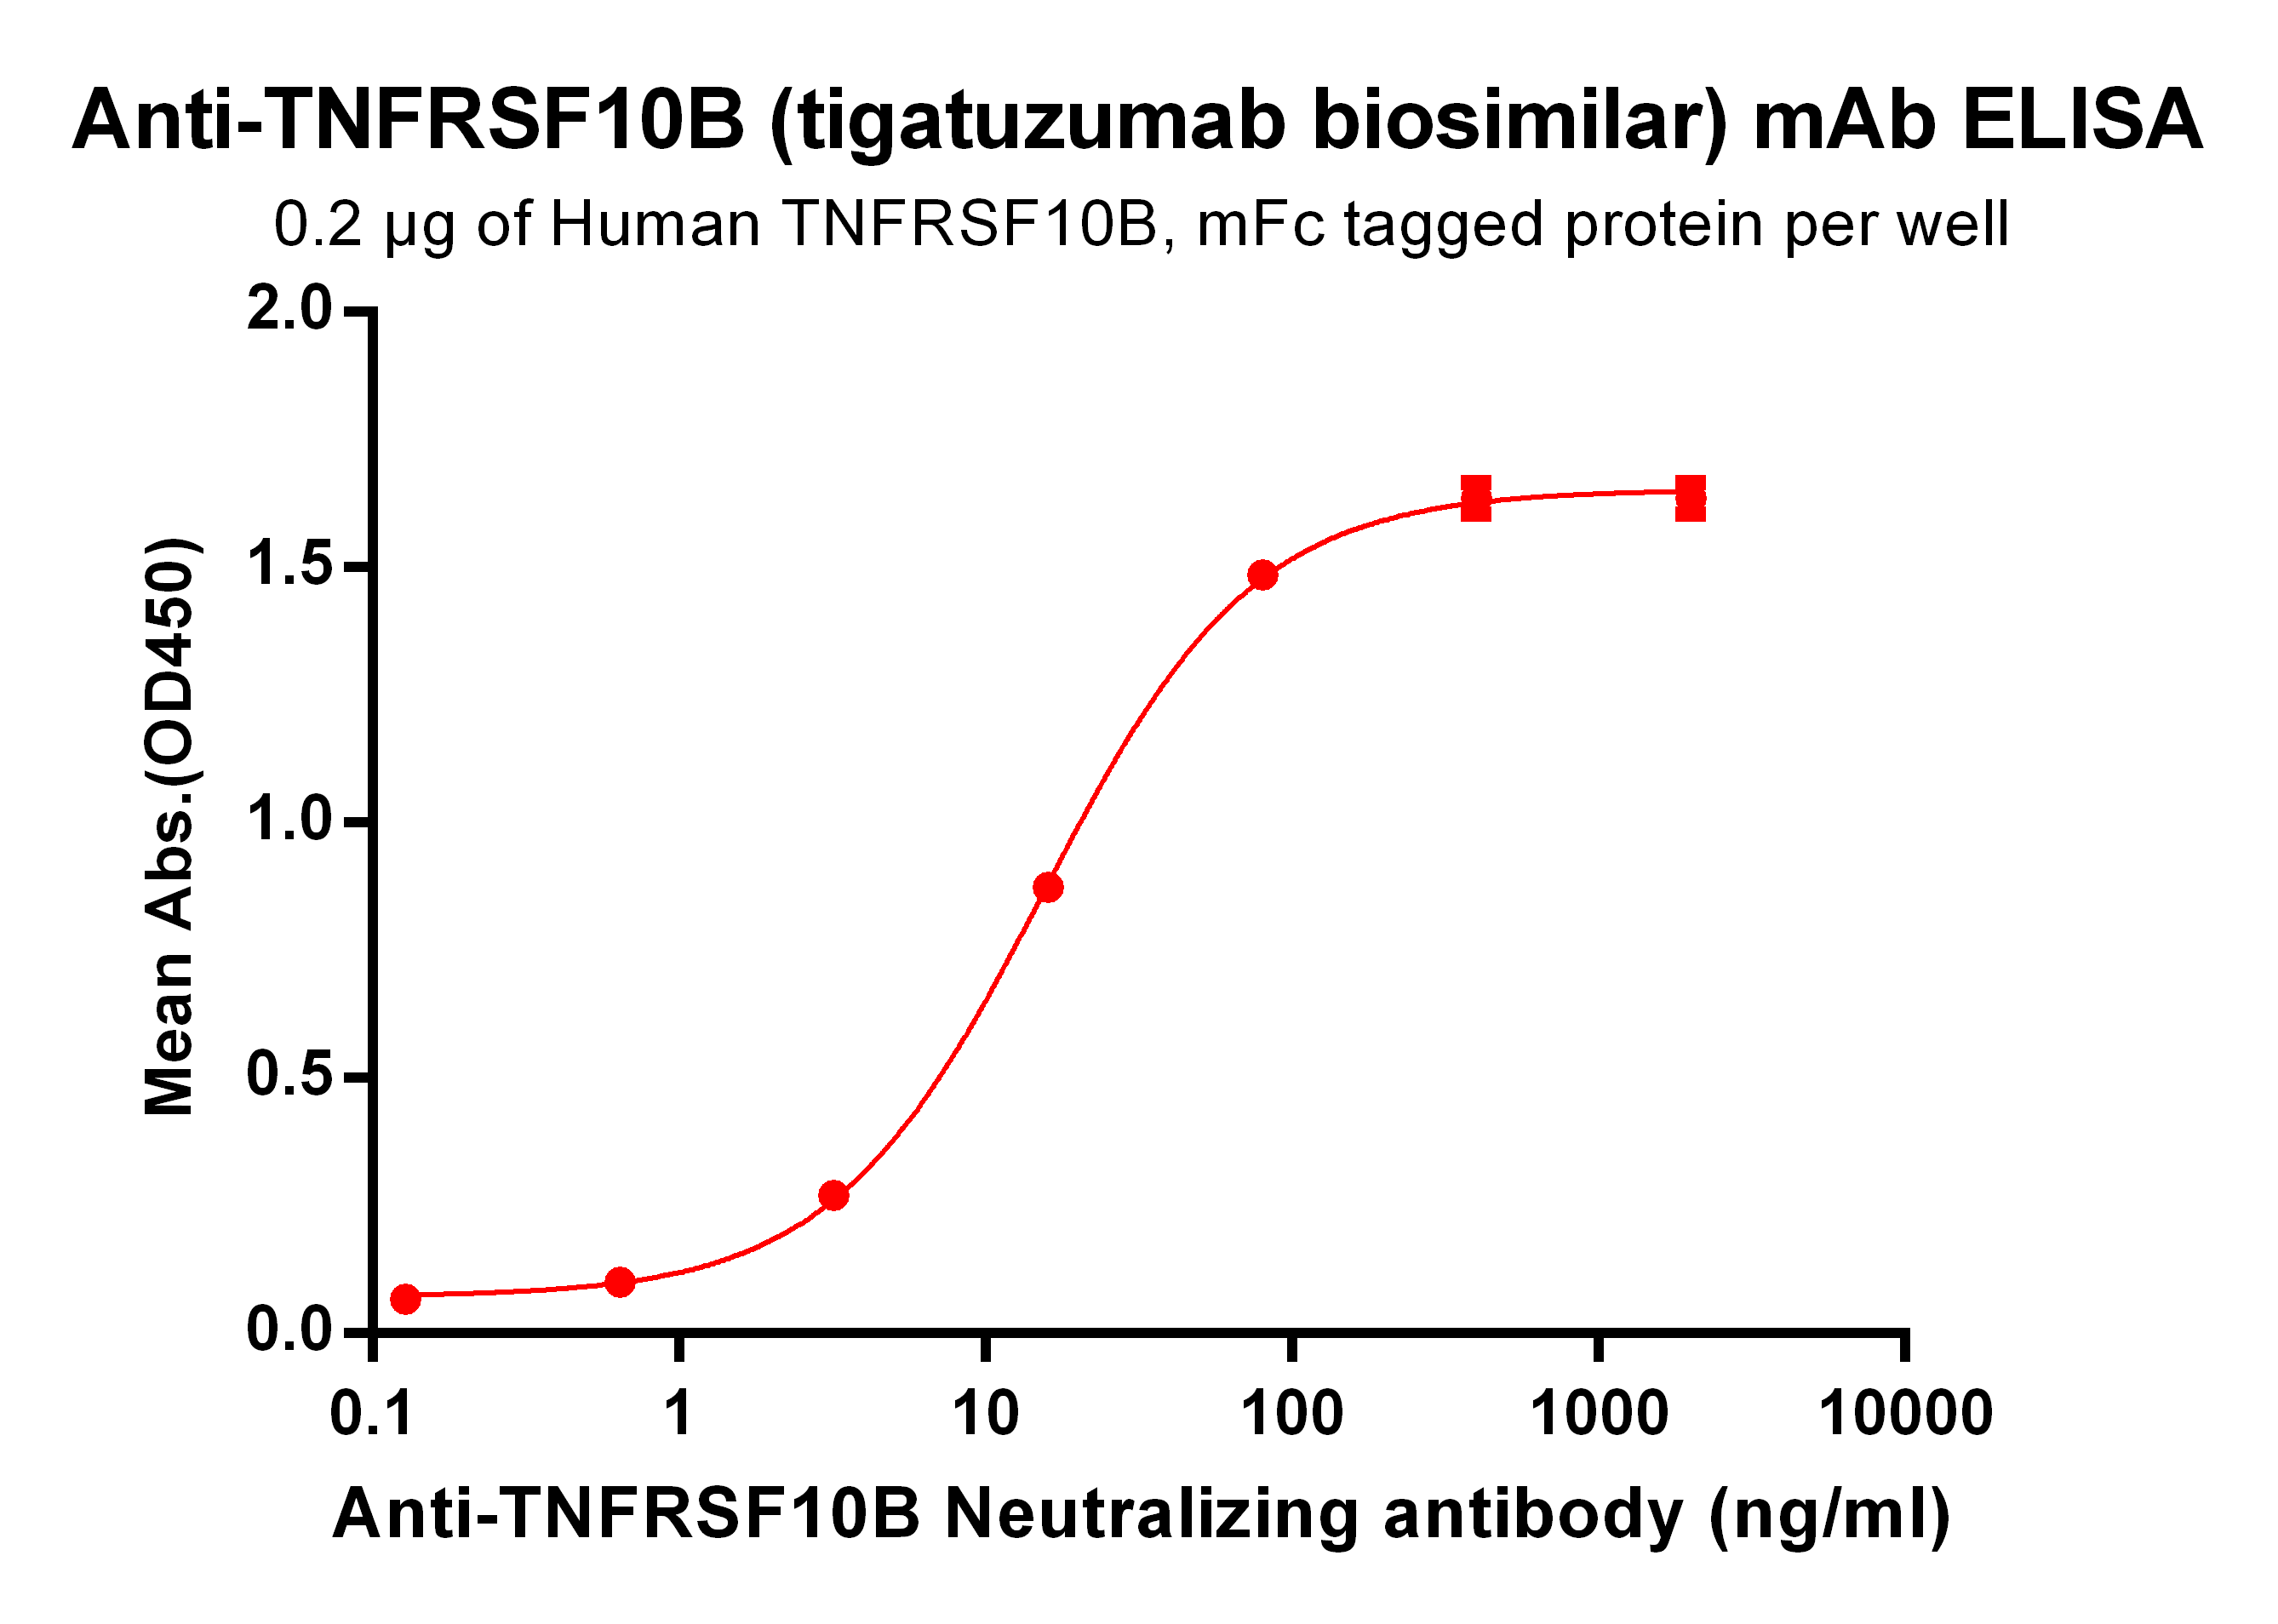 BME100032-Anti-TNFRSF10B-tigatuzumab-biosimilar-mAb-Elisa-fig1.png